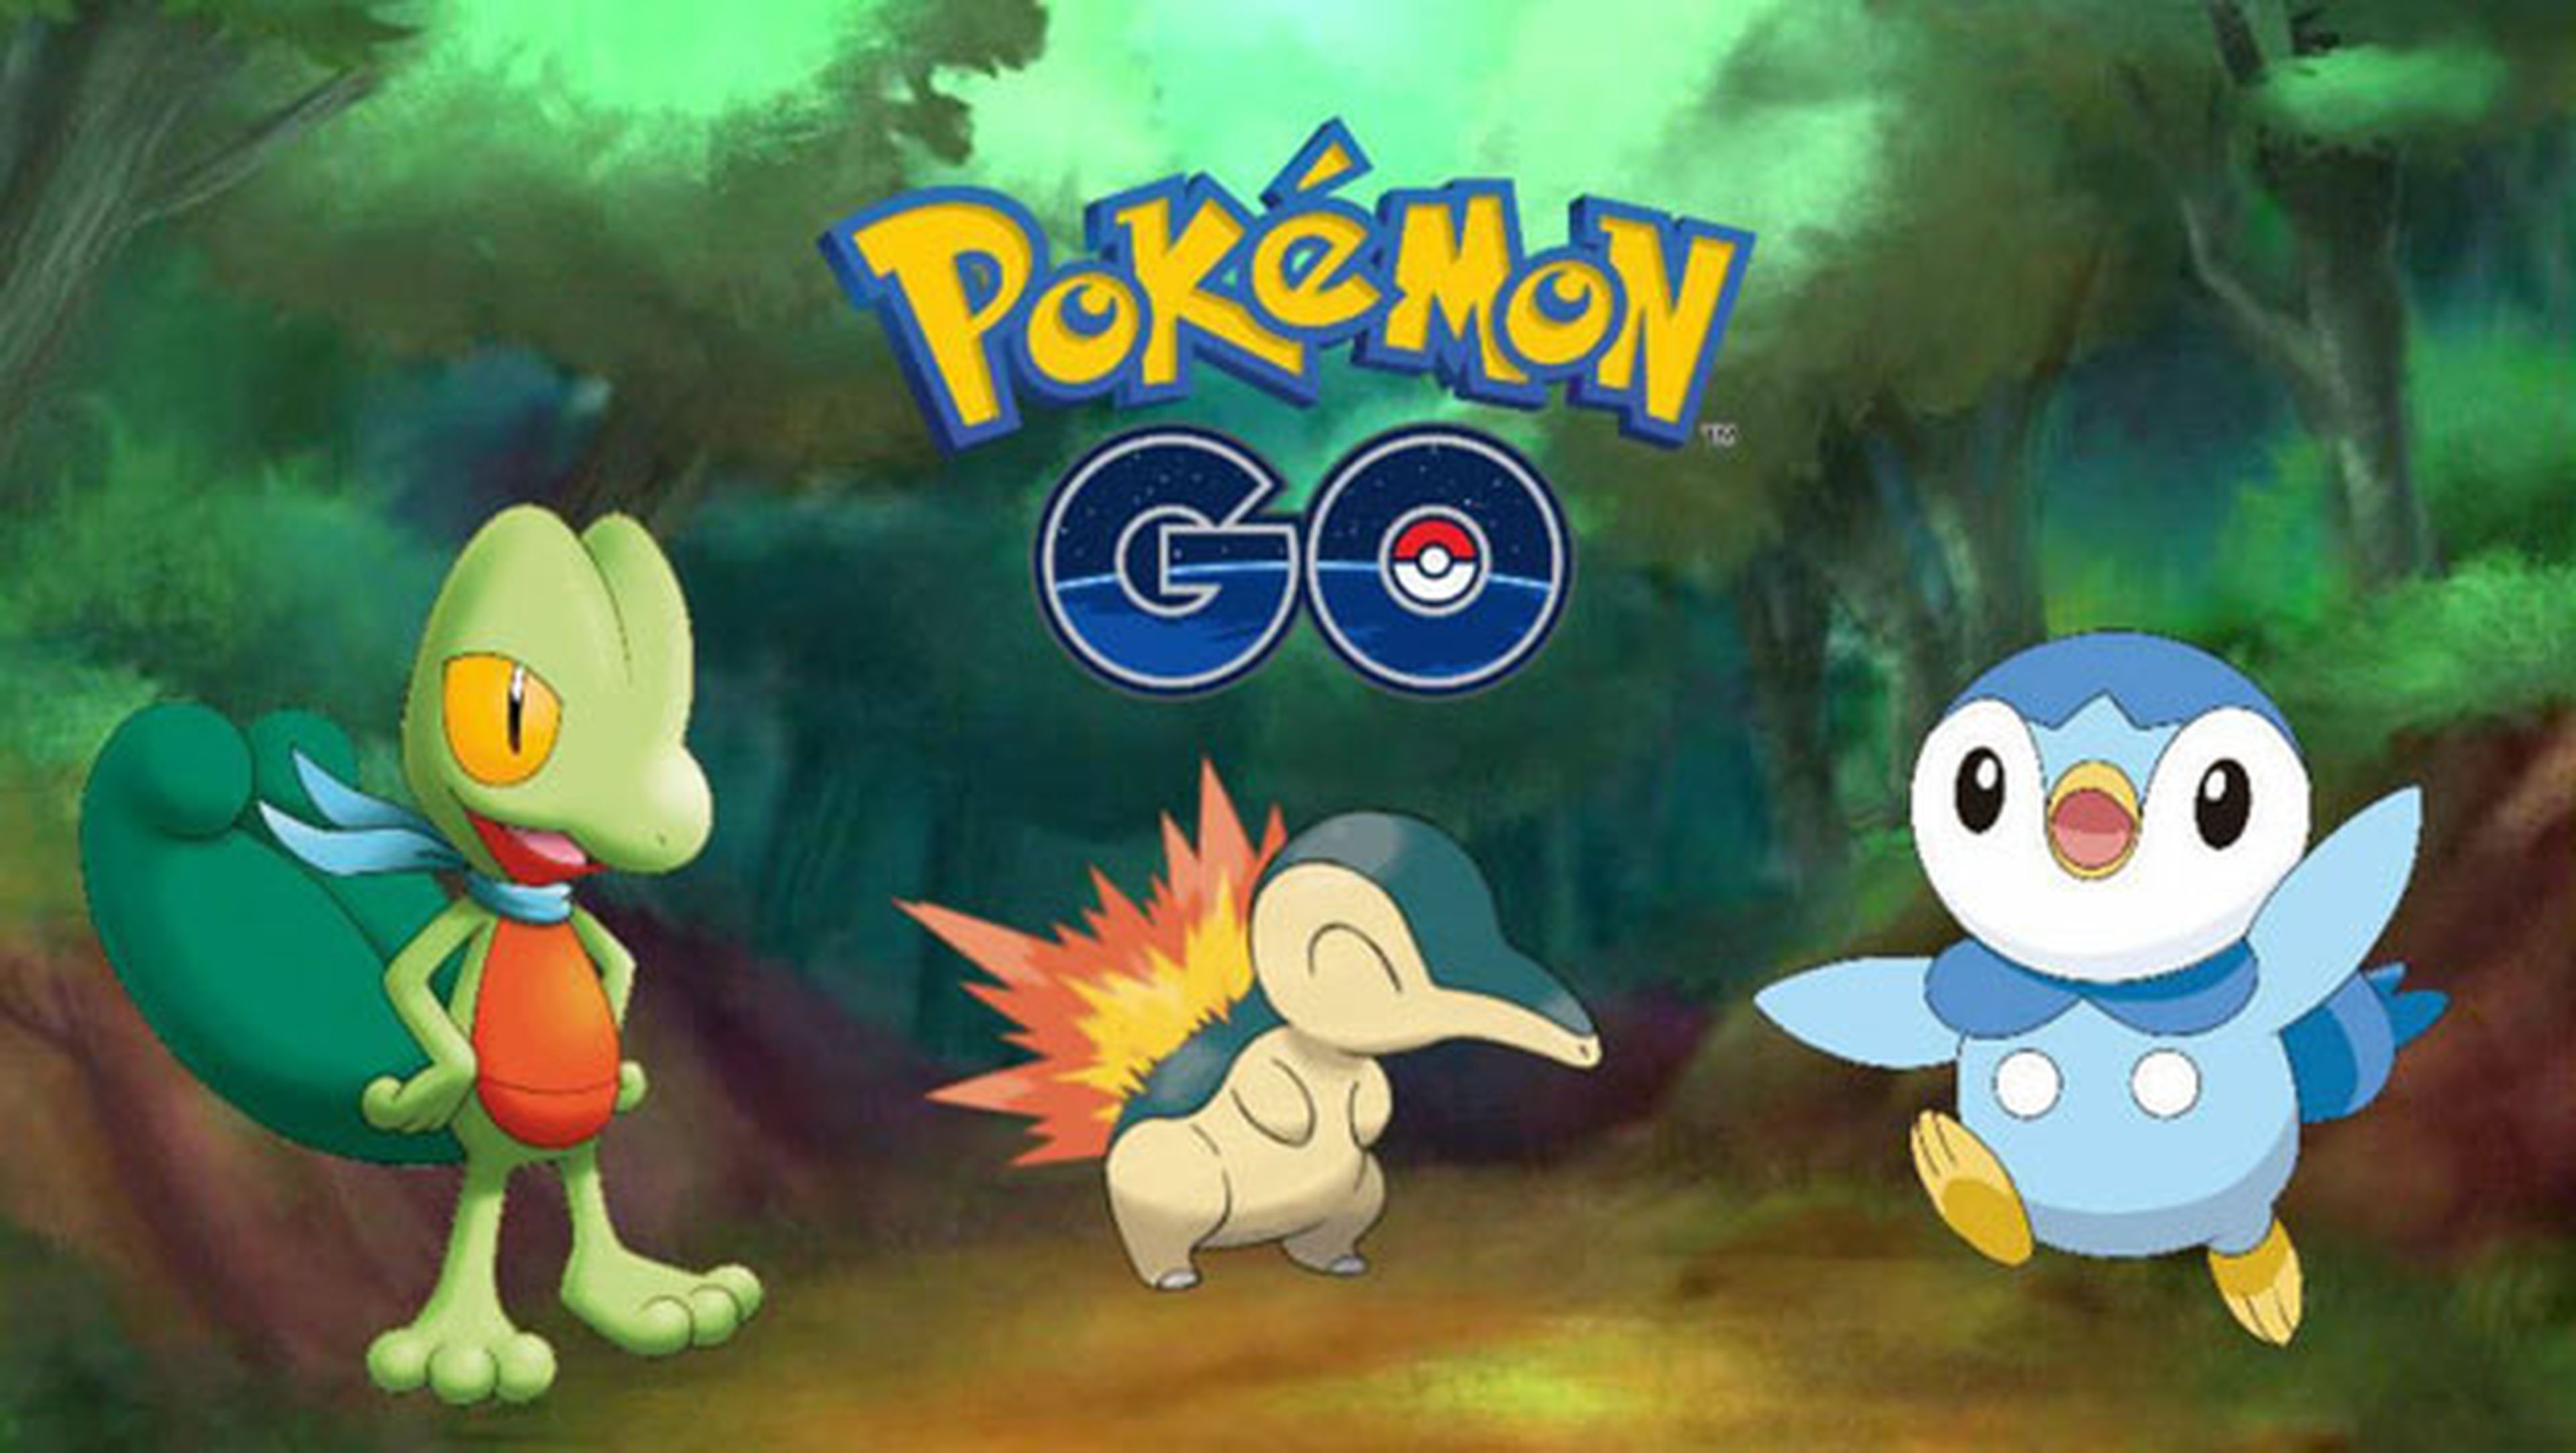 Pokémon GO recibirá nuevos pokémon y poképaradas personalizables